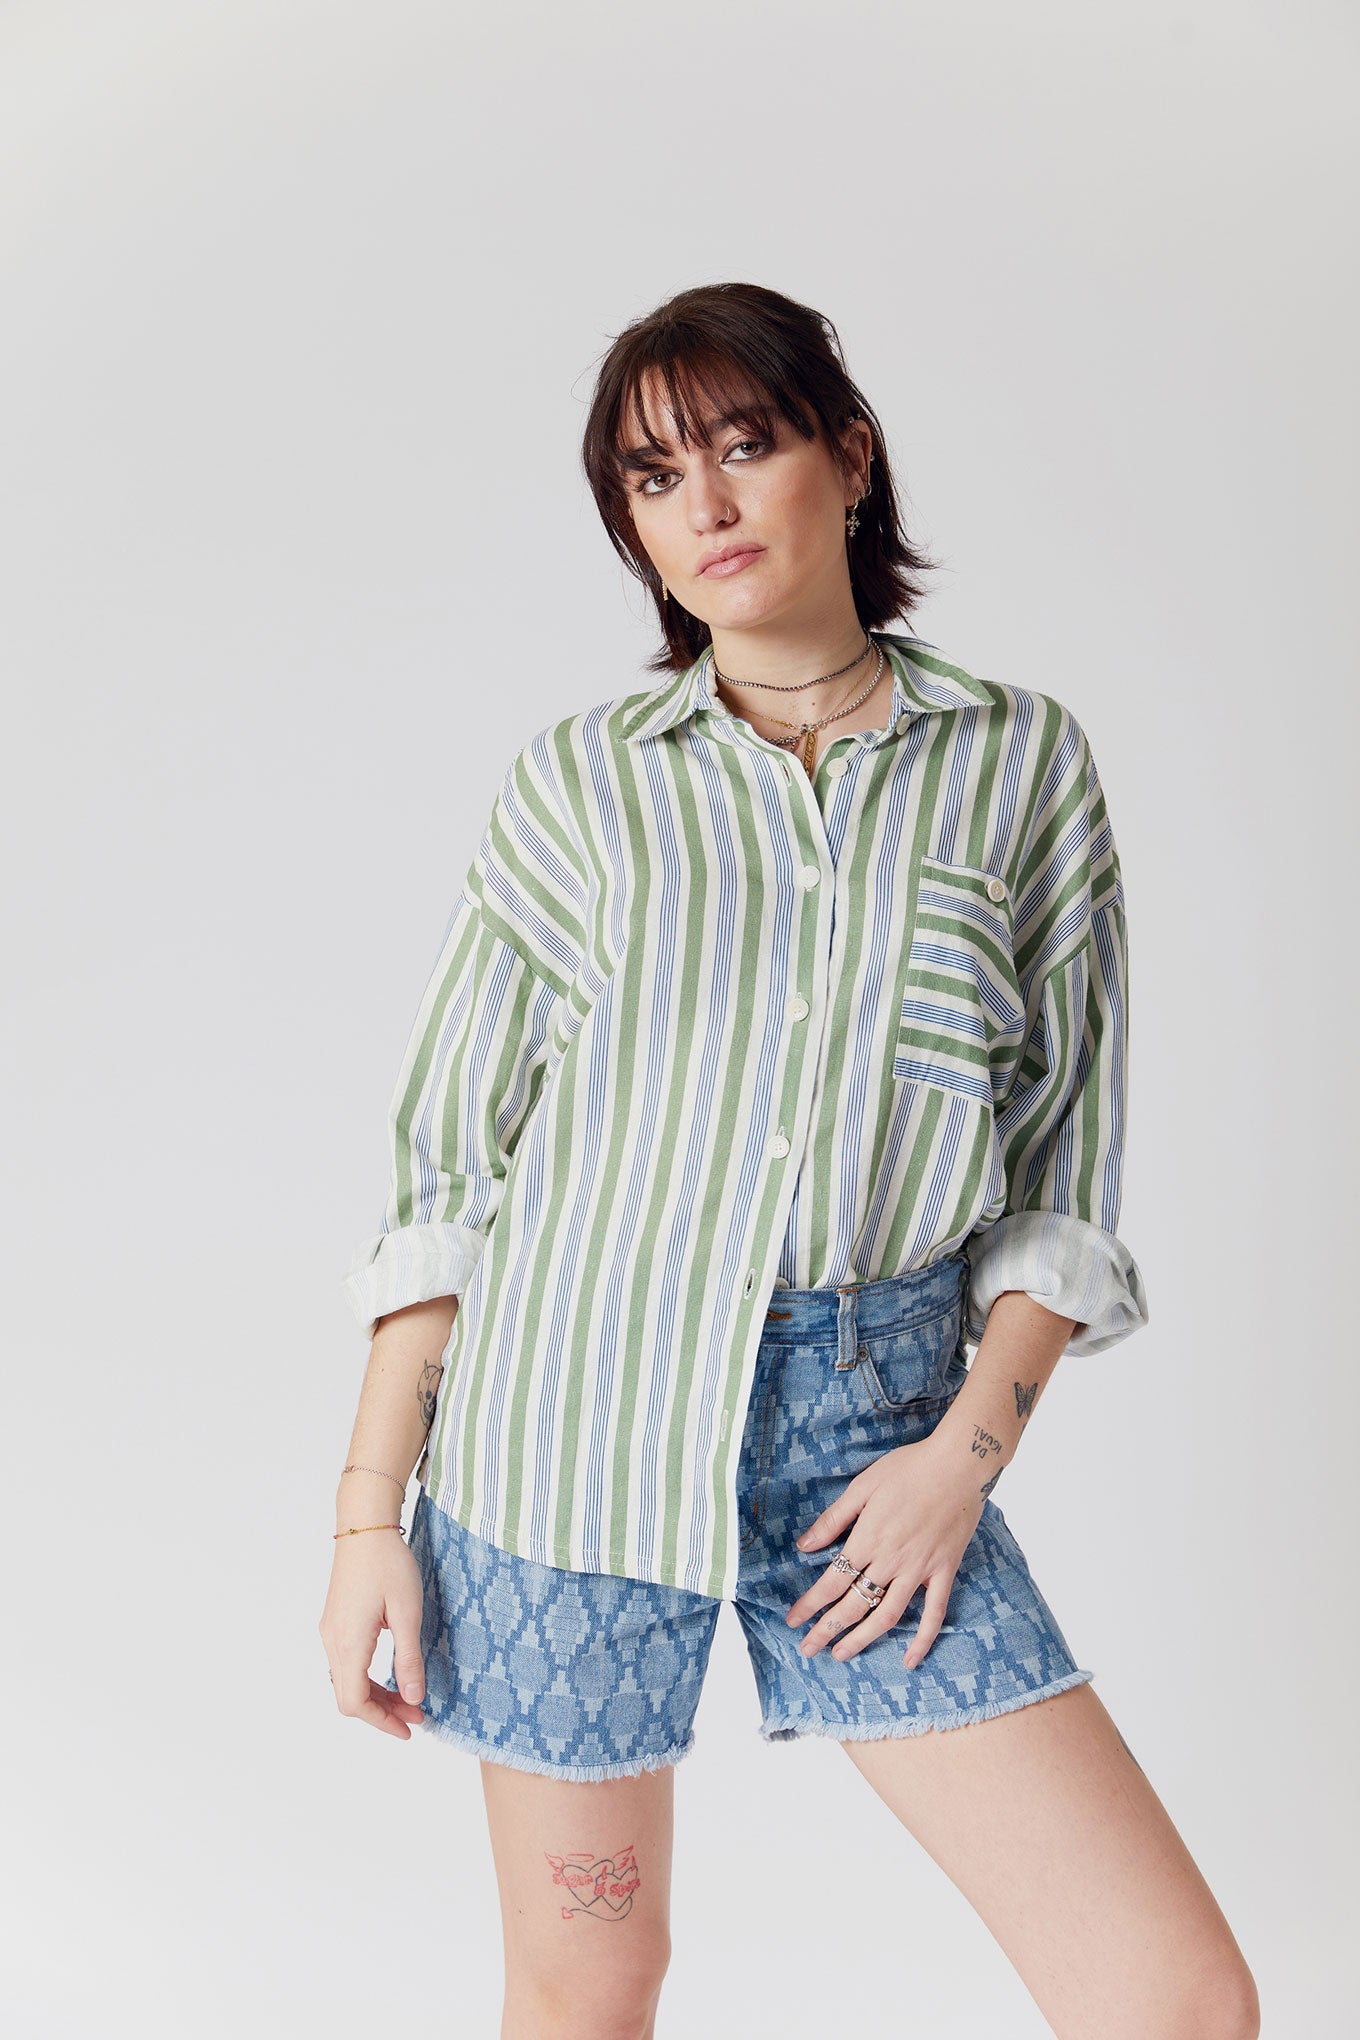 HANAKO Organic Linen Shirt Sage Green Stripe, SIZE 3 / UK 12 / EUR 40